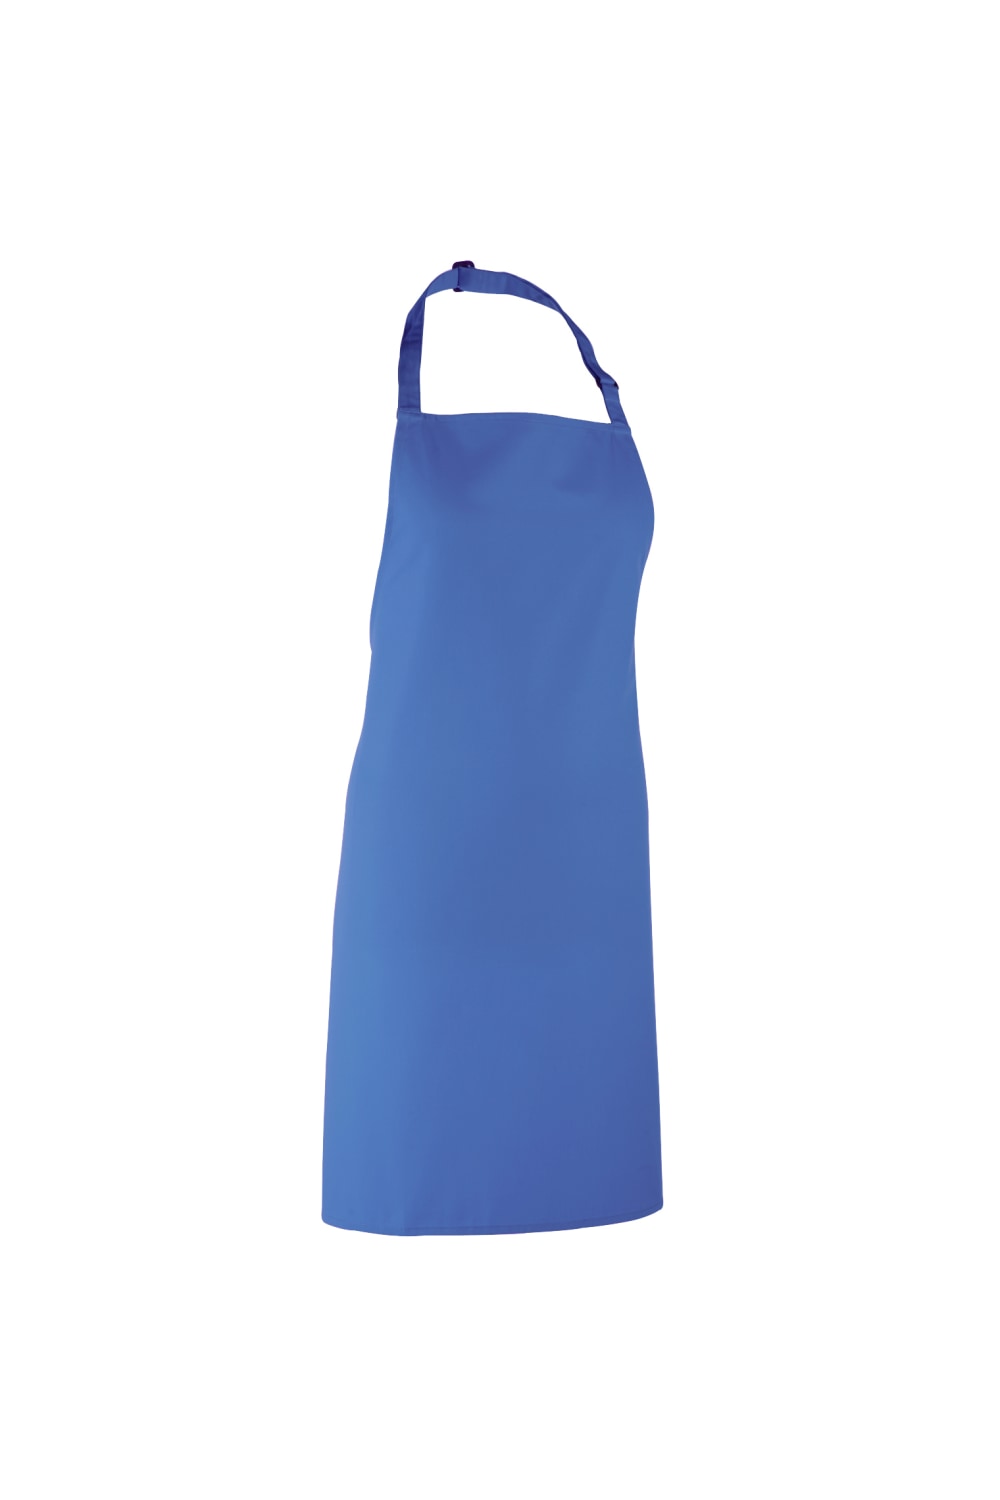 Premier Colours Bib Apron/Workwear (Sapphire) (One Size)